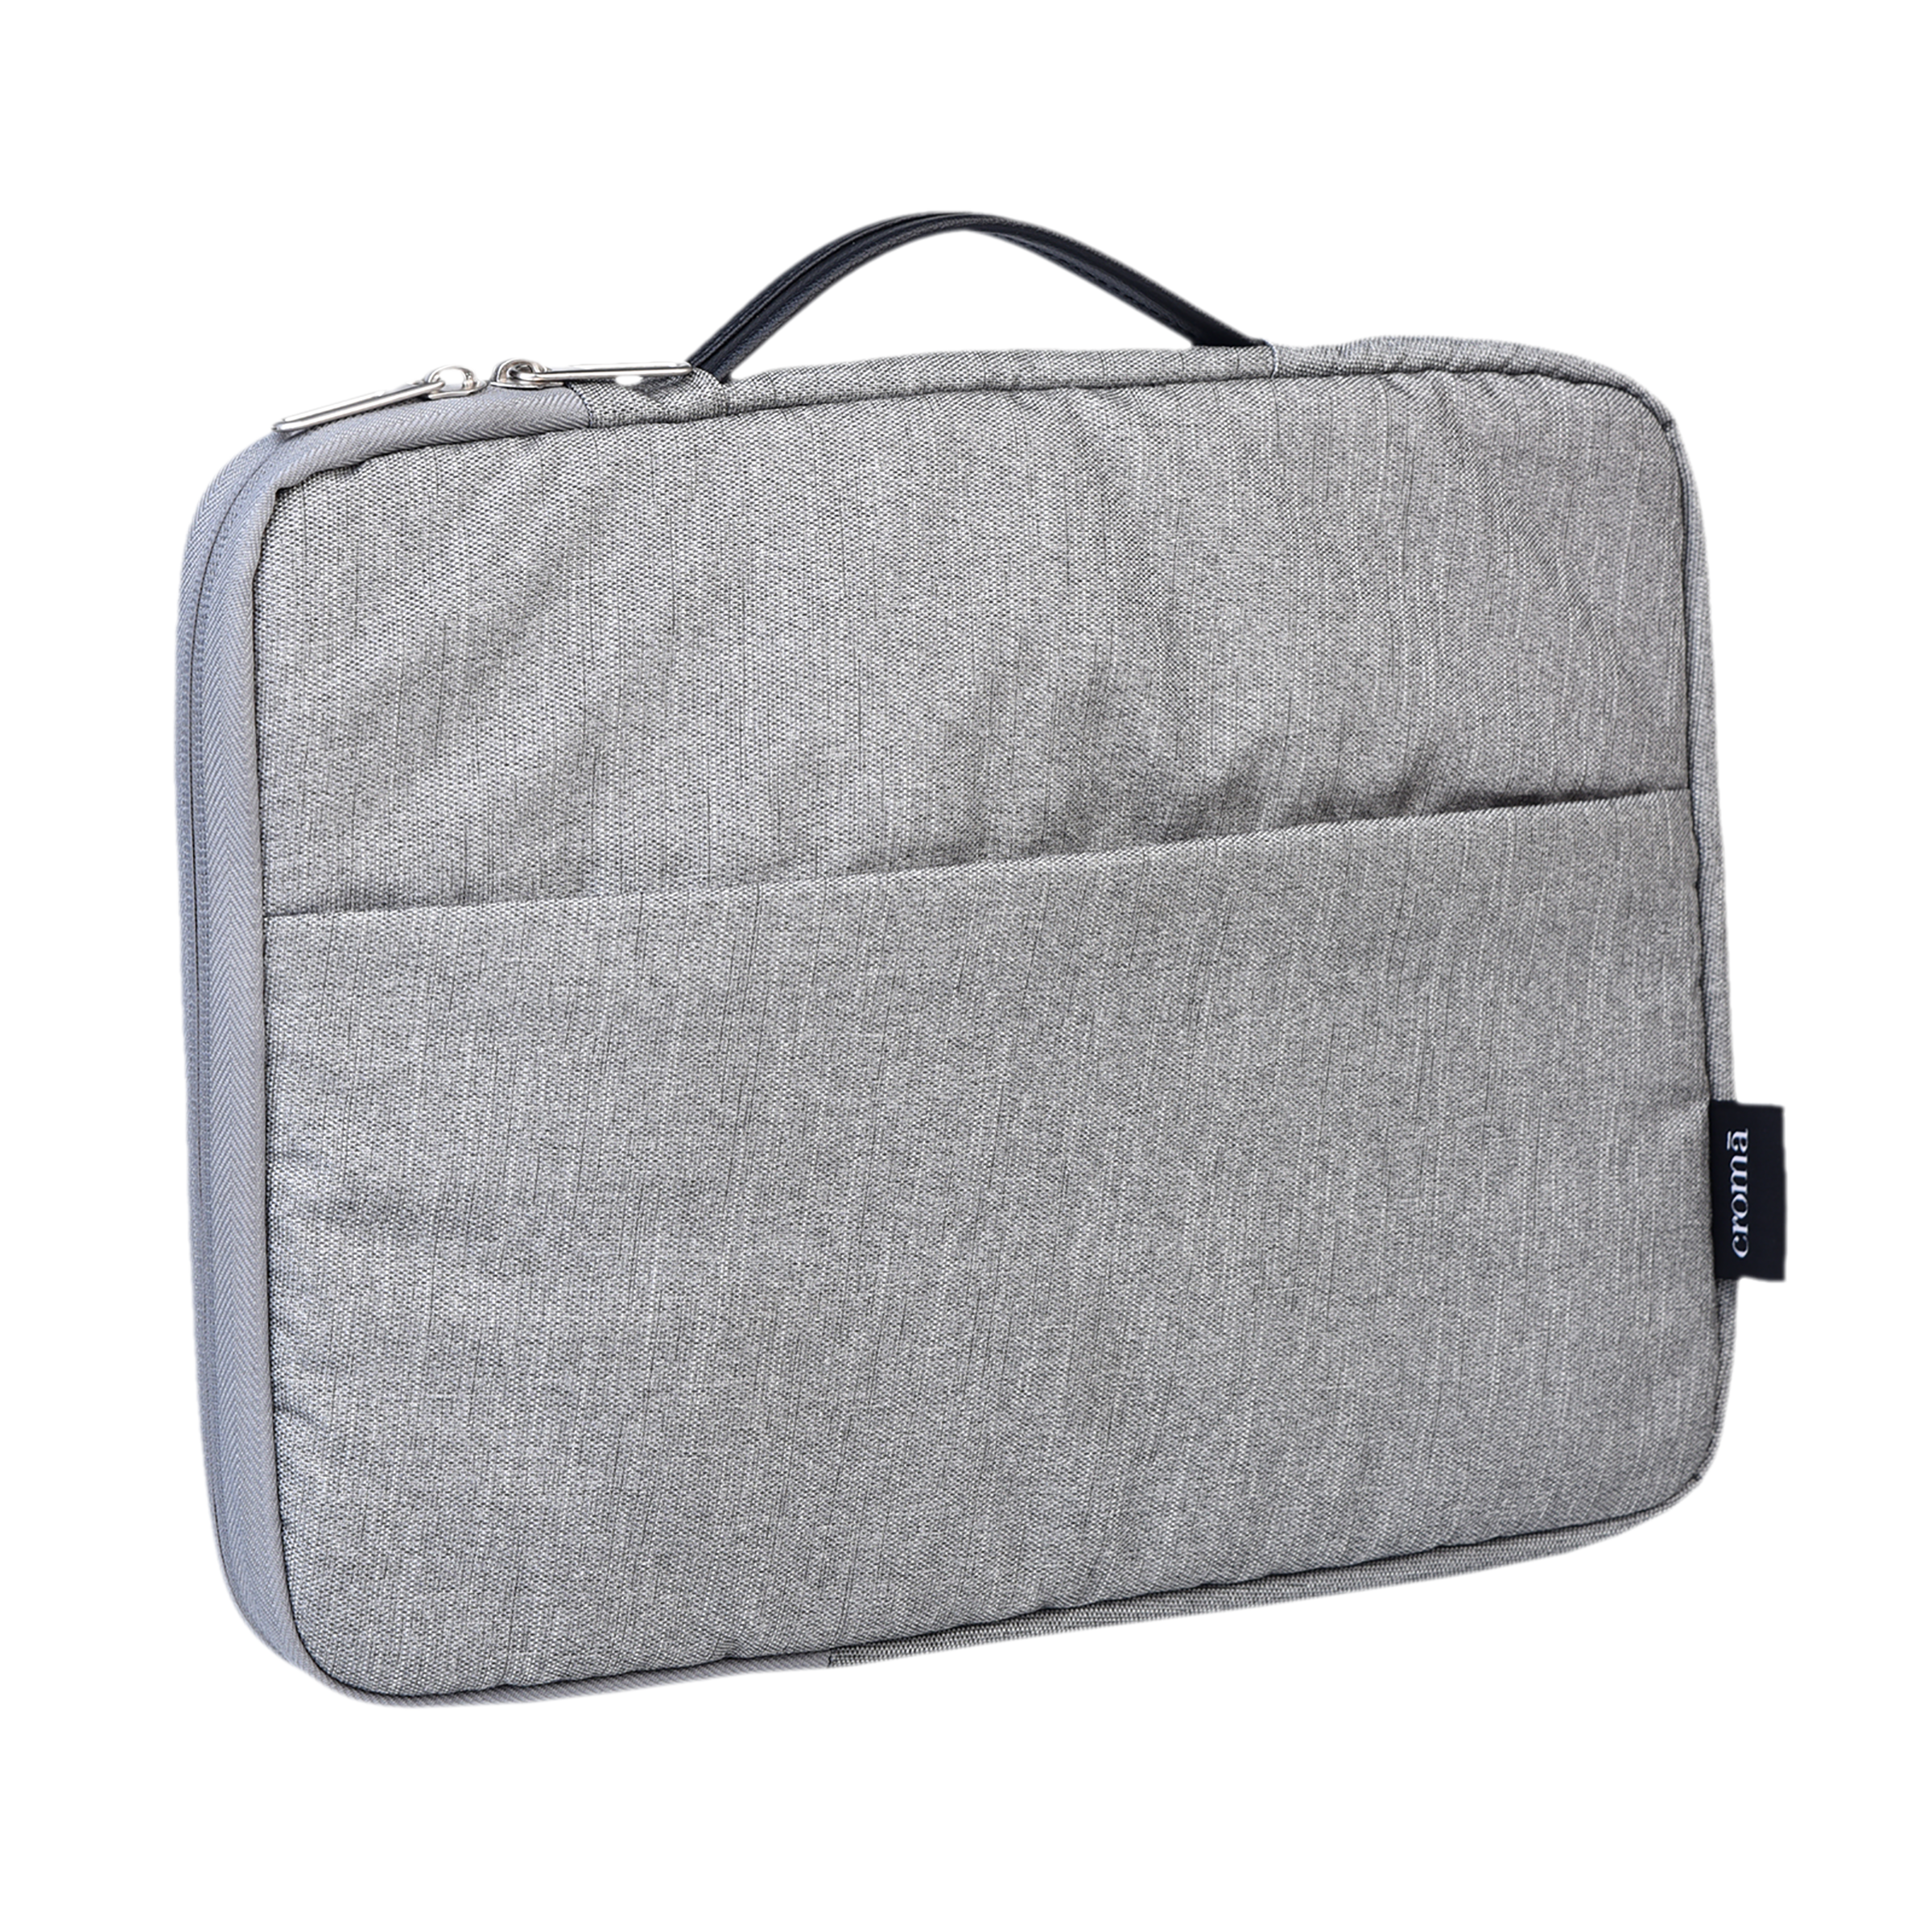 Hand Block Printed Laptop Bag/Sleeve. (Unisex, office use, casual use,  Spacious, stylish, sleek, Jaipuri, ikkat, ikat, floral, vegan leather) With  Extra Sling Straps.